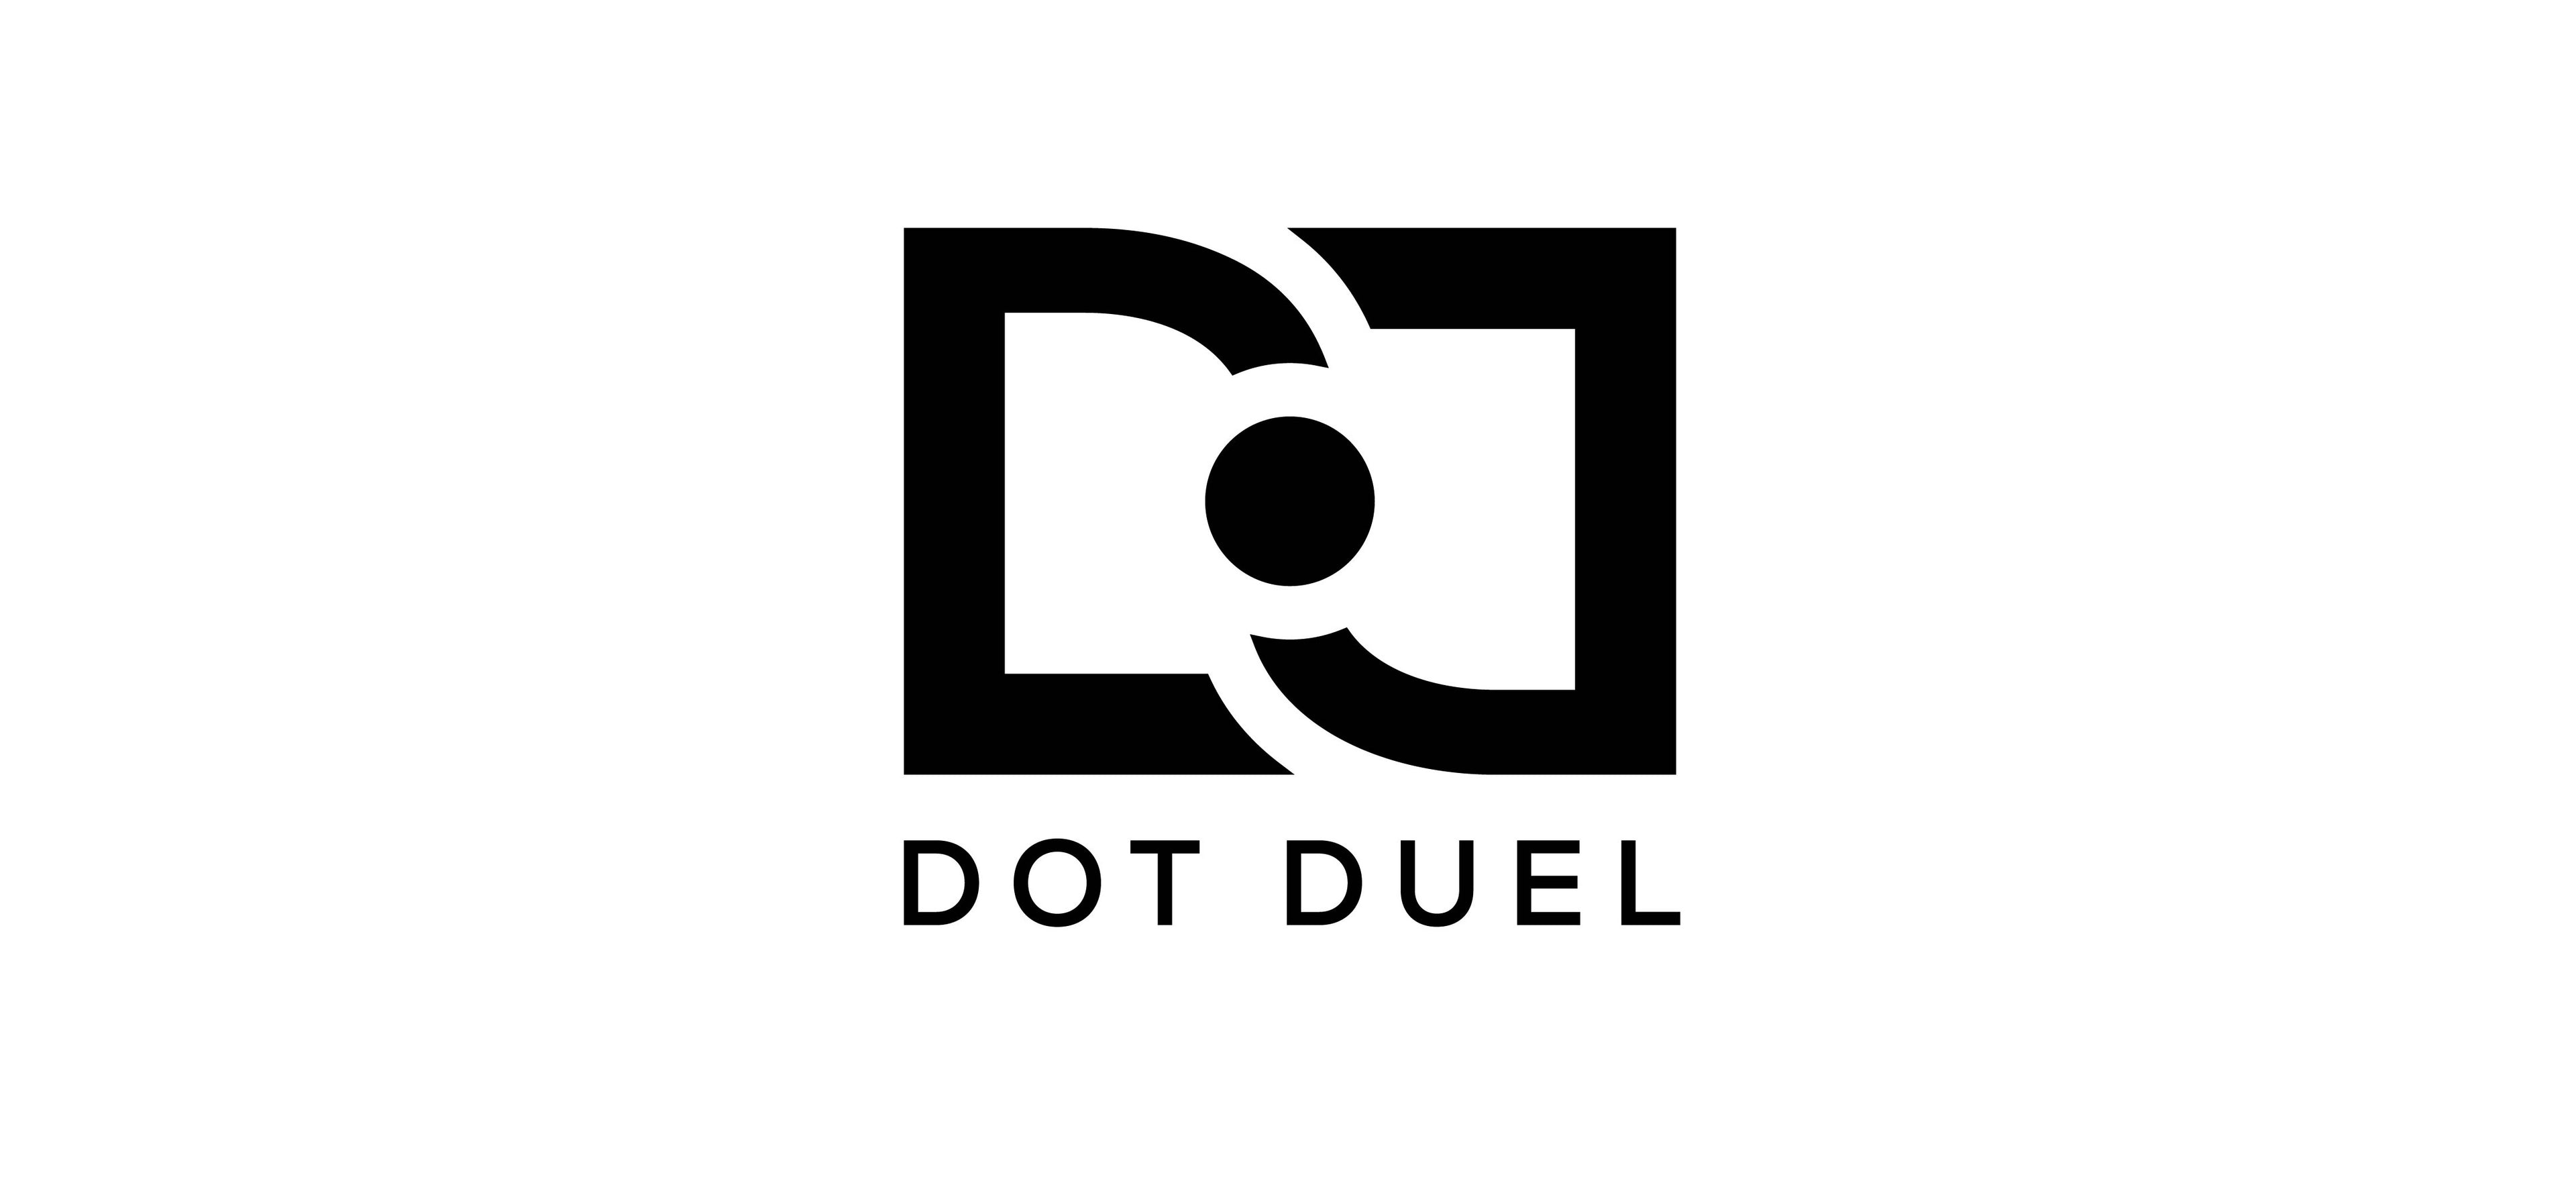 Load video: Explainer video for Dot Duel